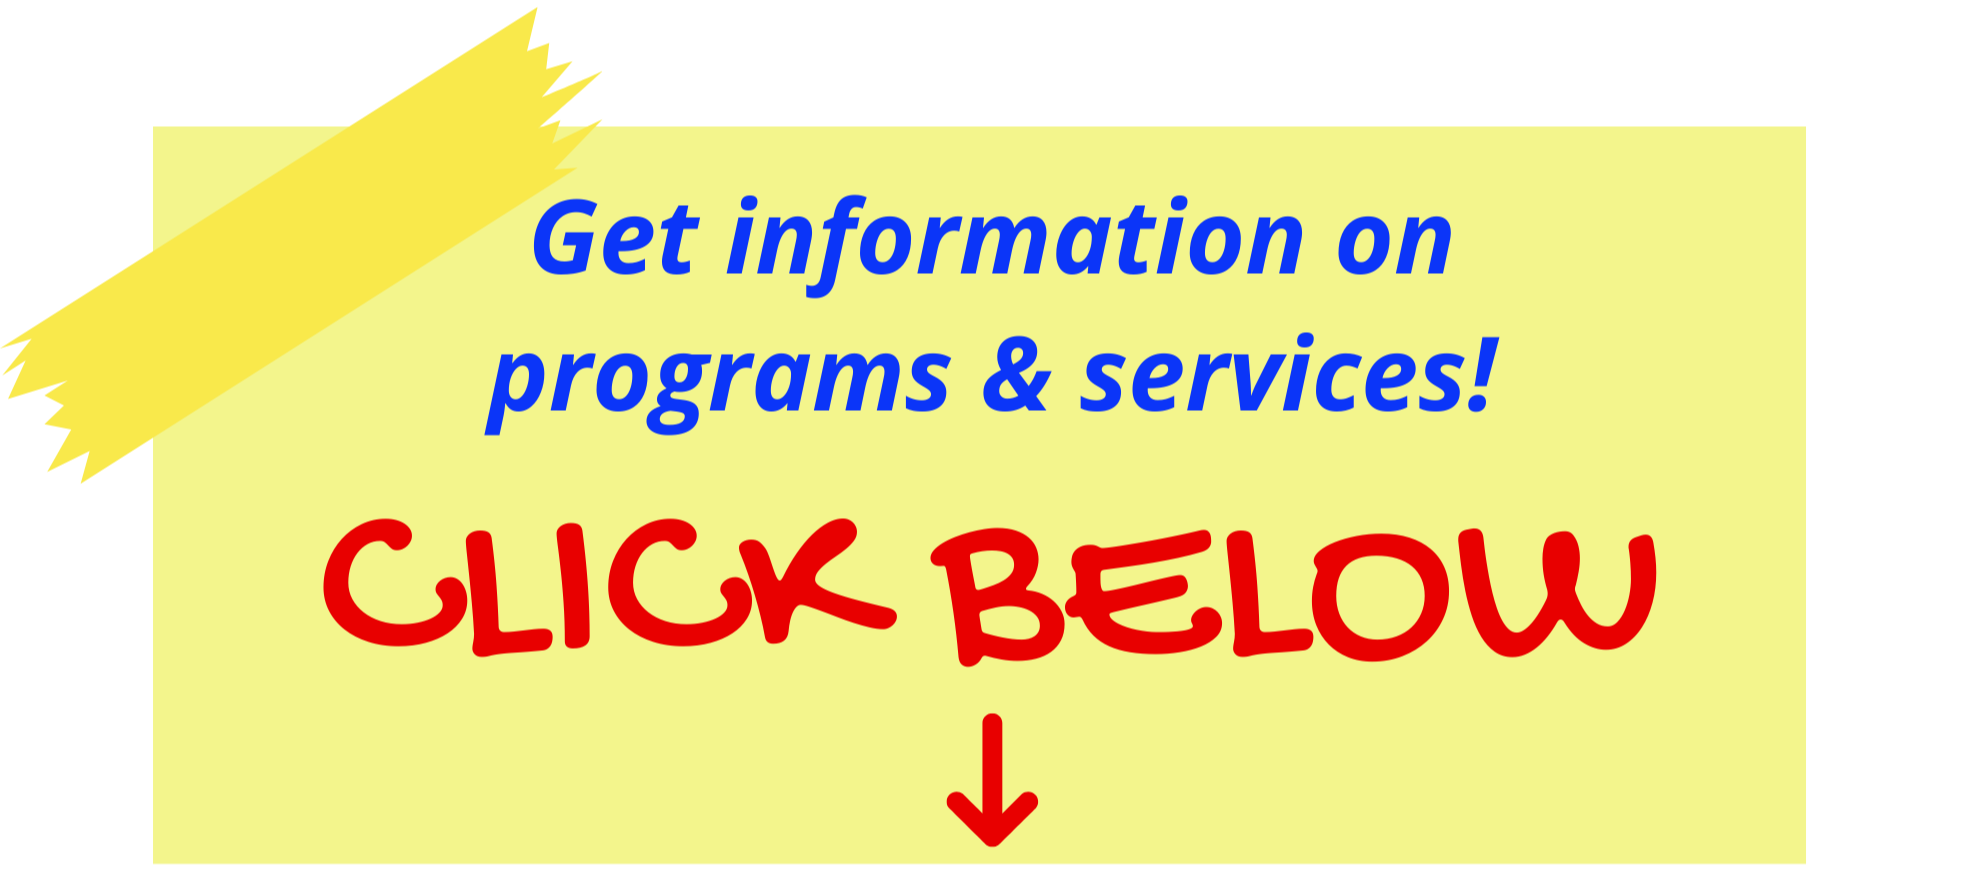 Get information on programs & services, CLICK BELOW, Arrow